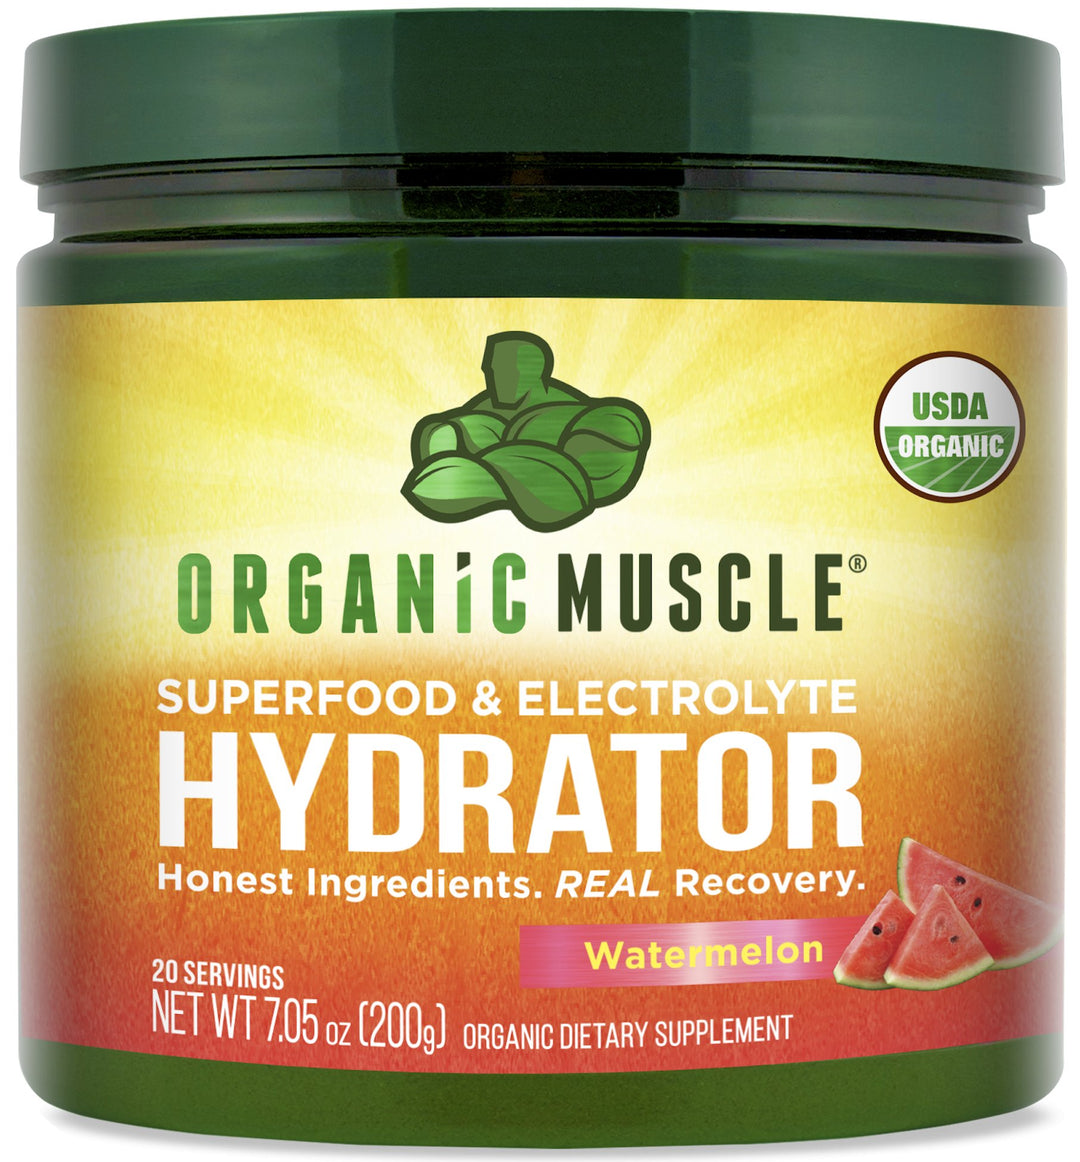 Organic Muscle Starter Pack - Organic Muscle Fitness SupplementsOrganic Muscle Fitness SupplementsOrganic Muscle Fitness Supplements